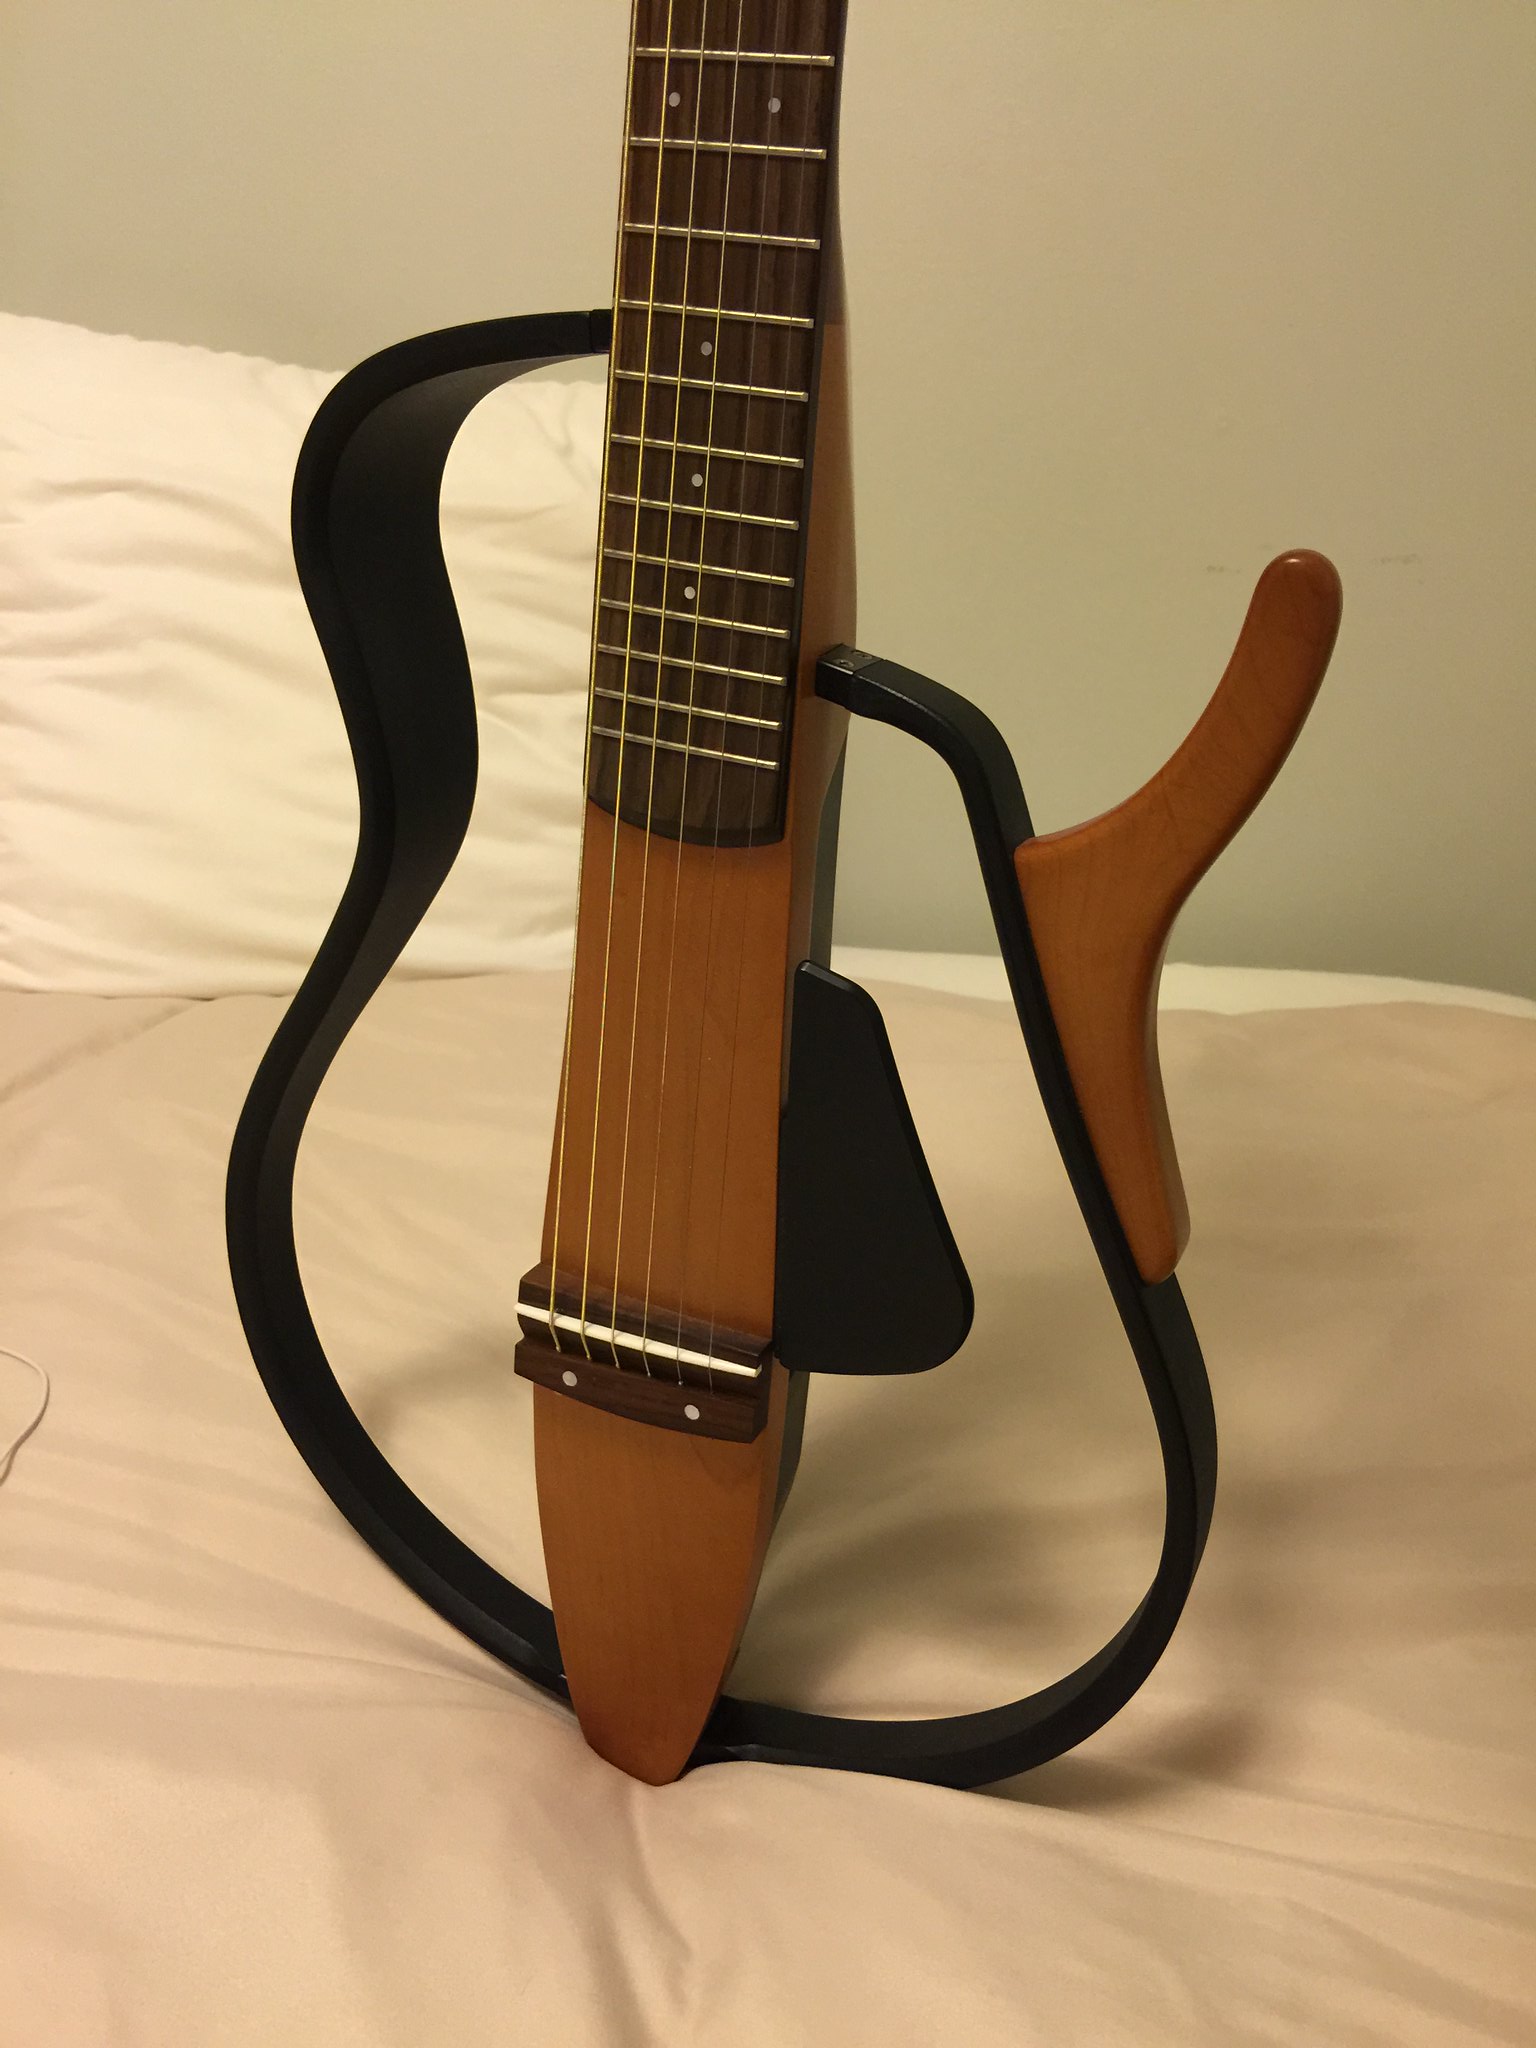 YAMAHA SLG110S アコースティックギター インターネットショッピングにて購入の正規品